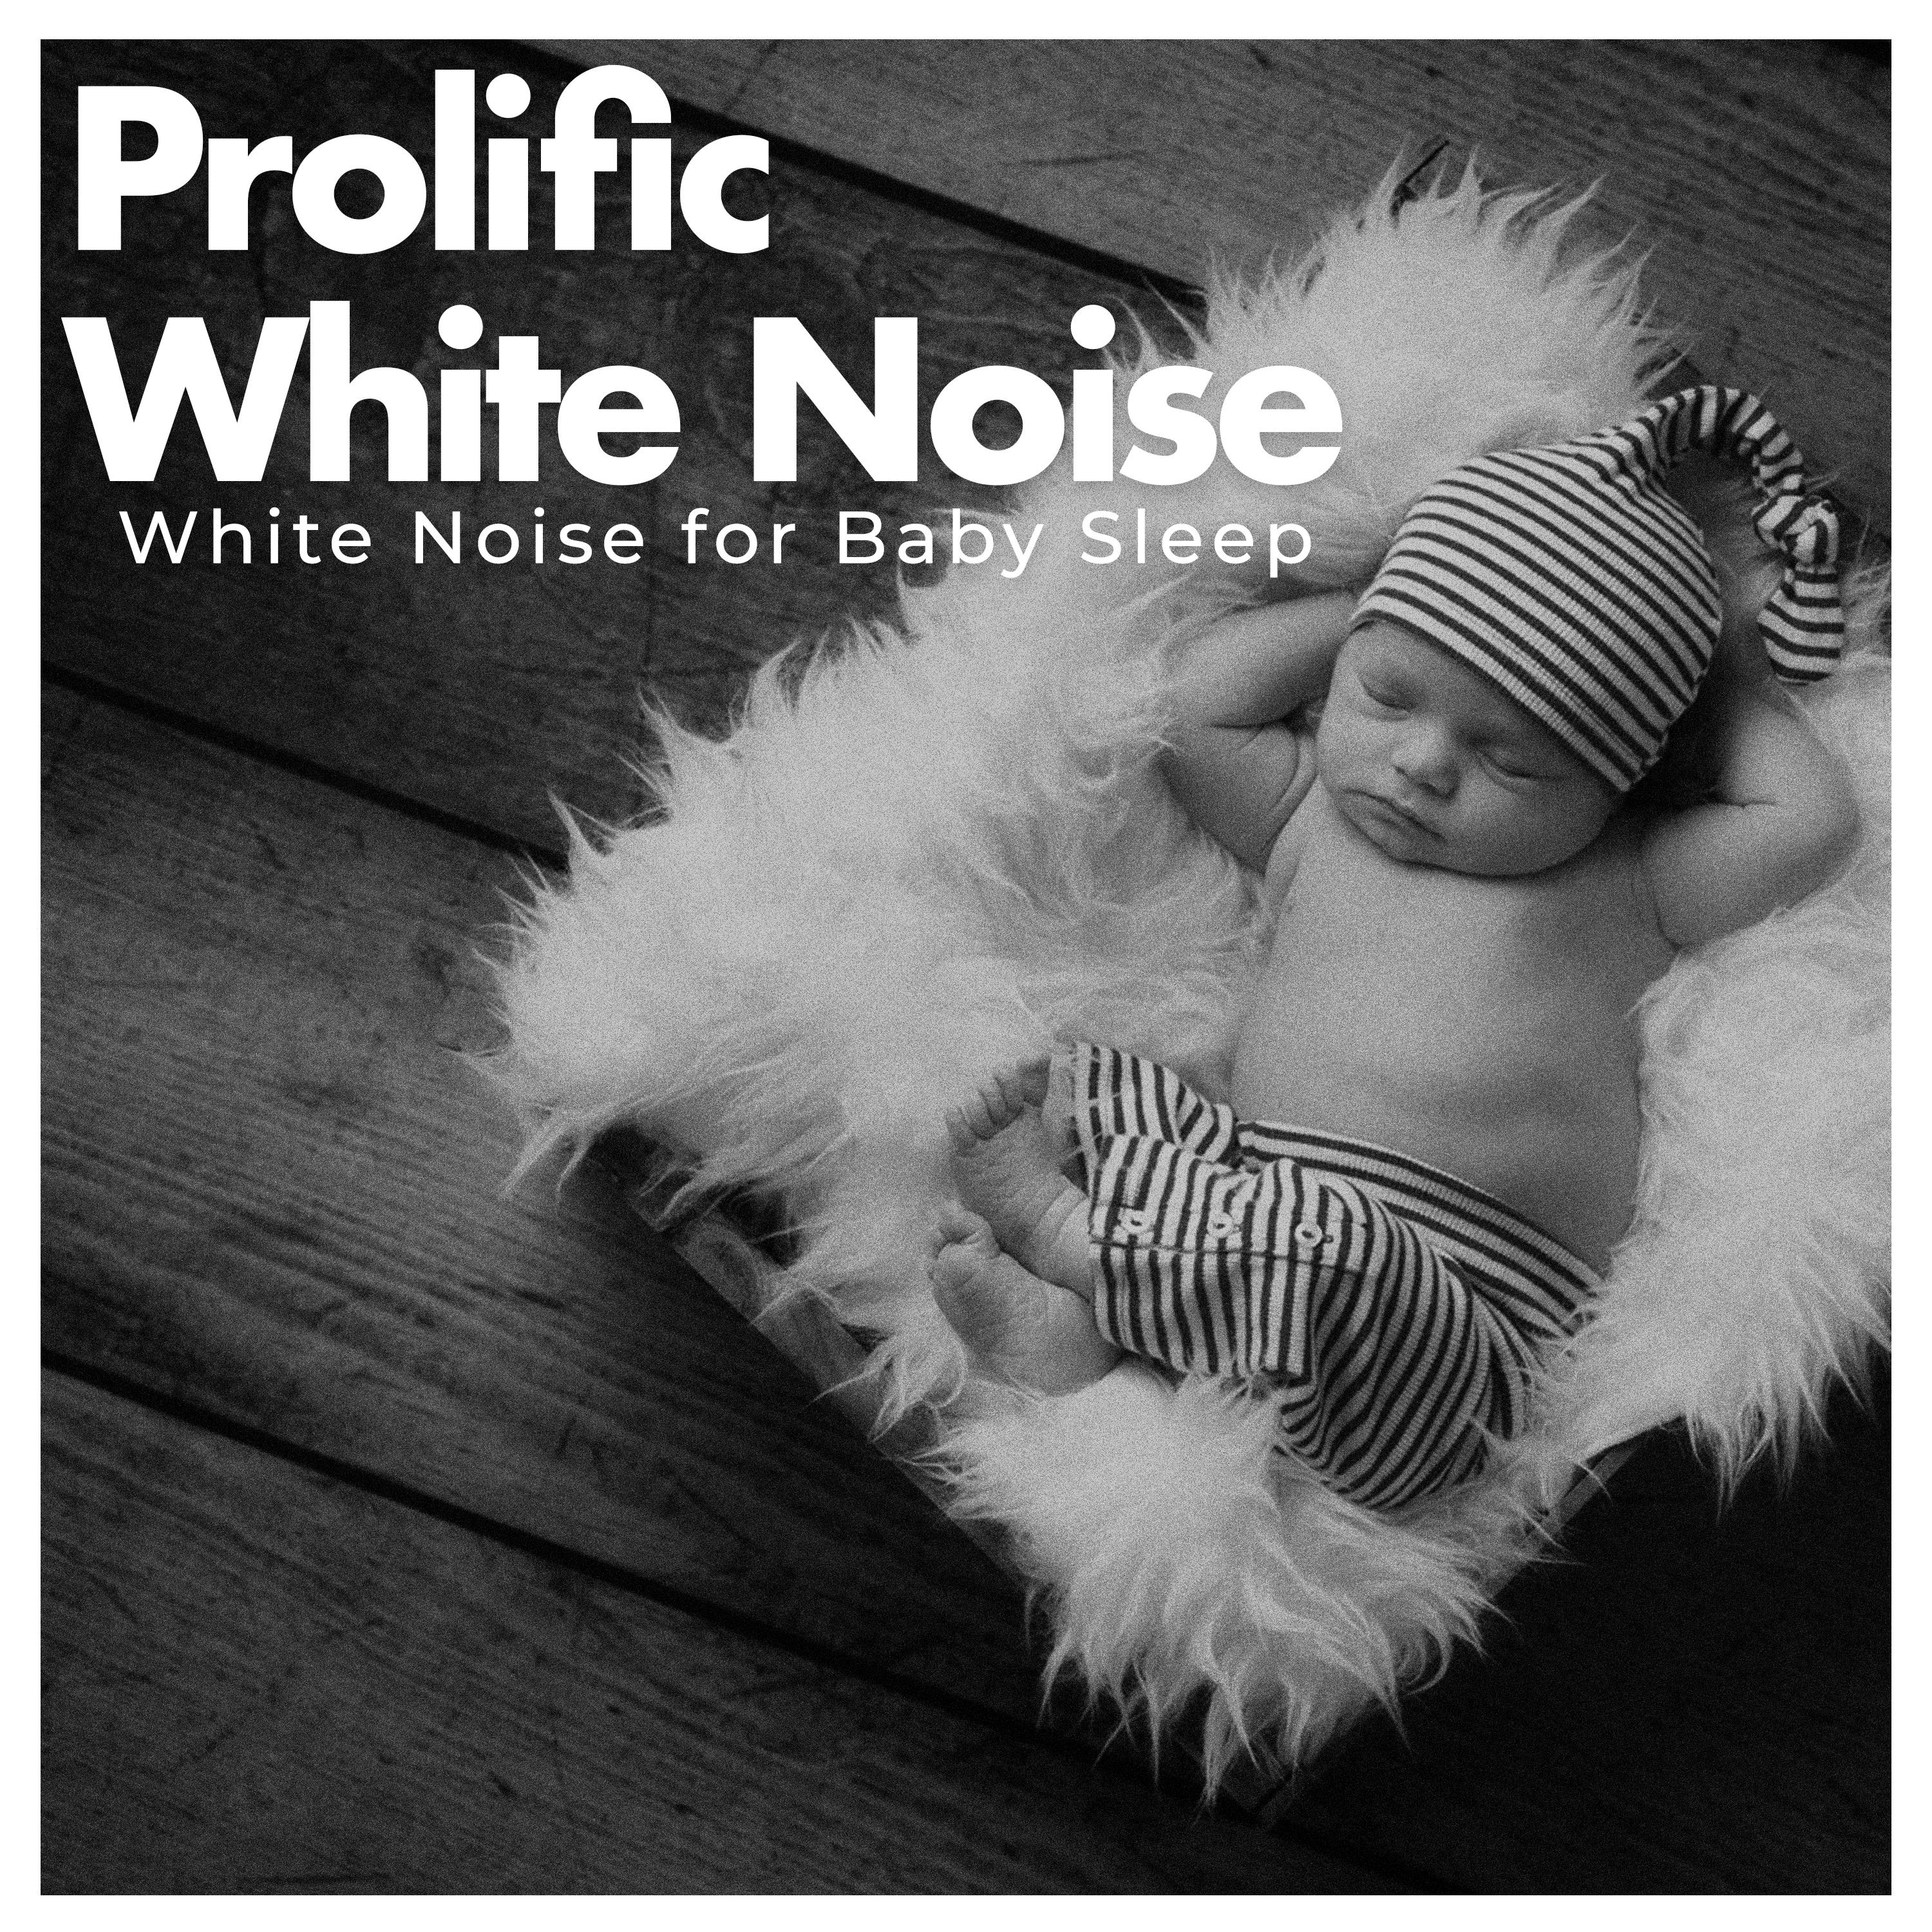 Prolific White Noise